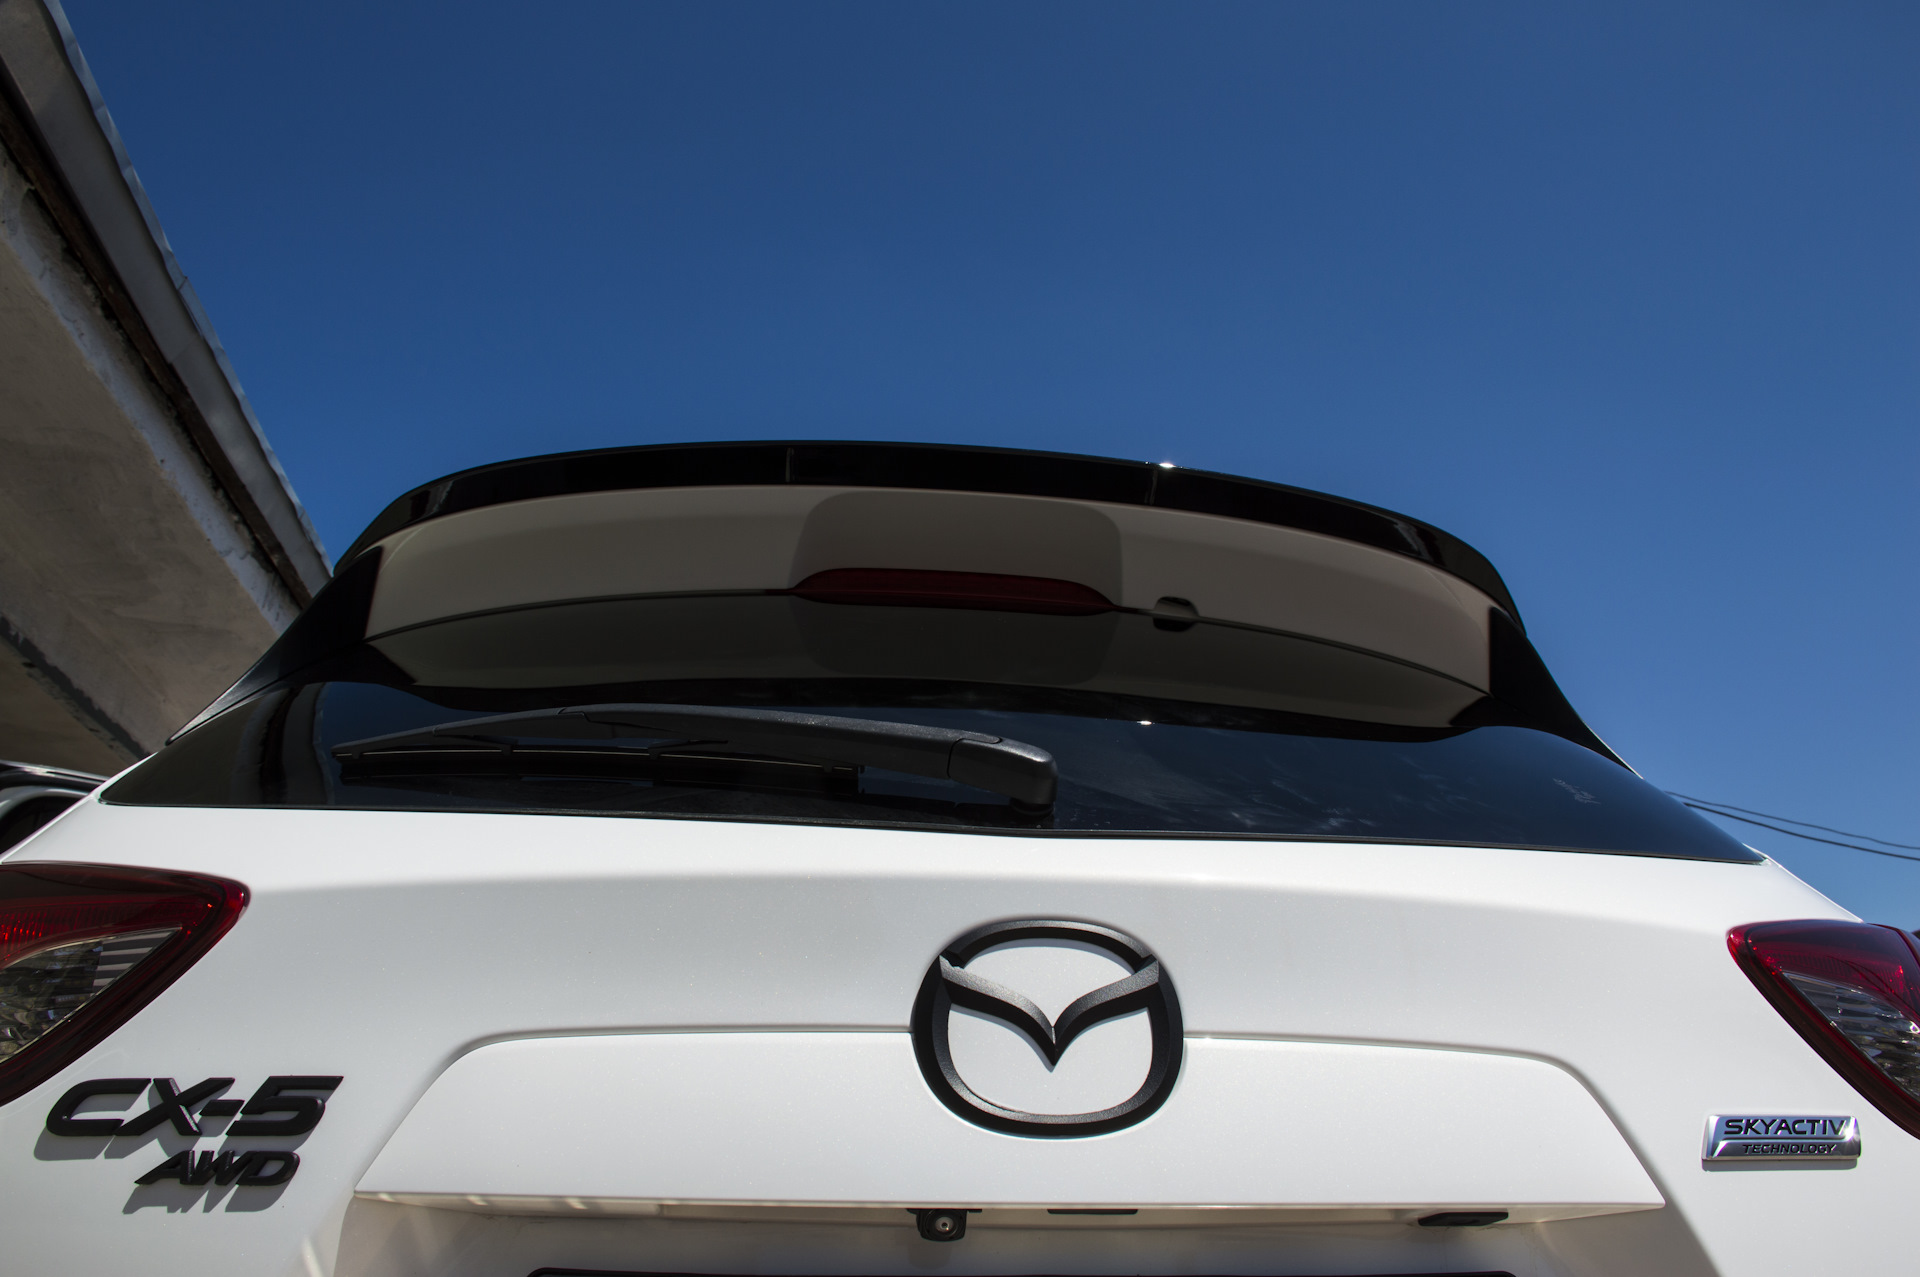 Мазда сх5 крыша. Mazda CX 5 спойлер. Мазда СХ-5 белая с черной крышей. Спойлер для Мазда сх5 2021. Спойлер Мазда сх5.